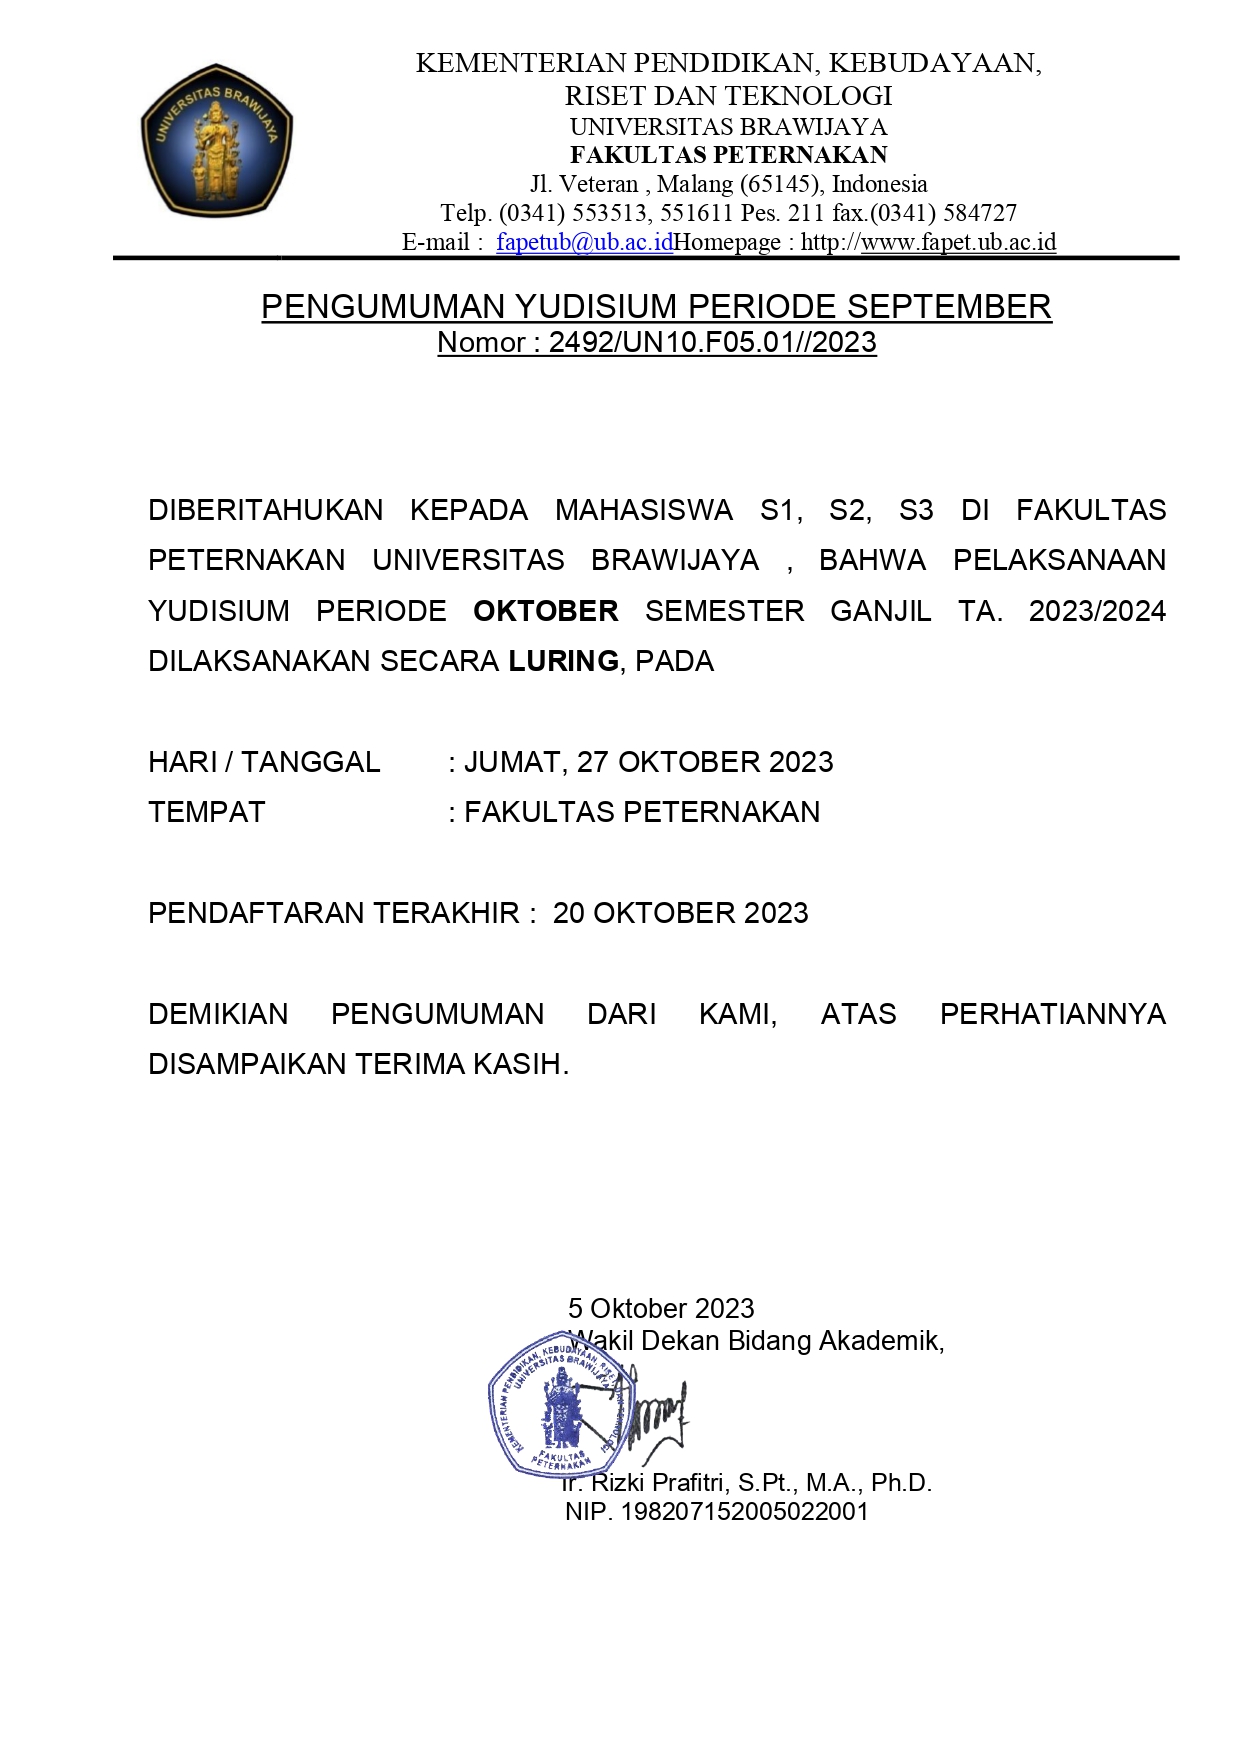 (Indonesia) Pengumuman Yudisium Sarjana, Magister, dan Doktor Ilmu Ternak Bulan Oktober 2023